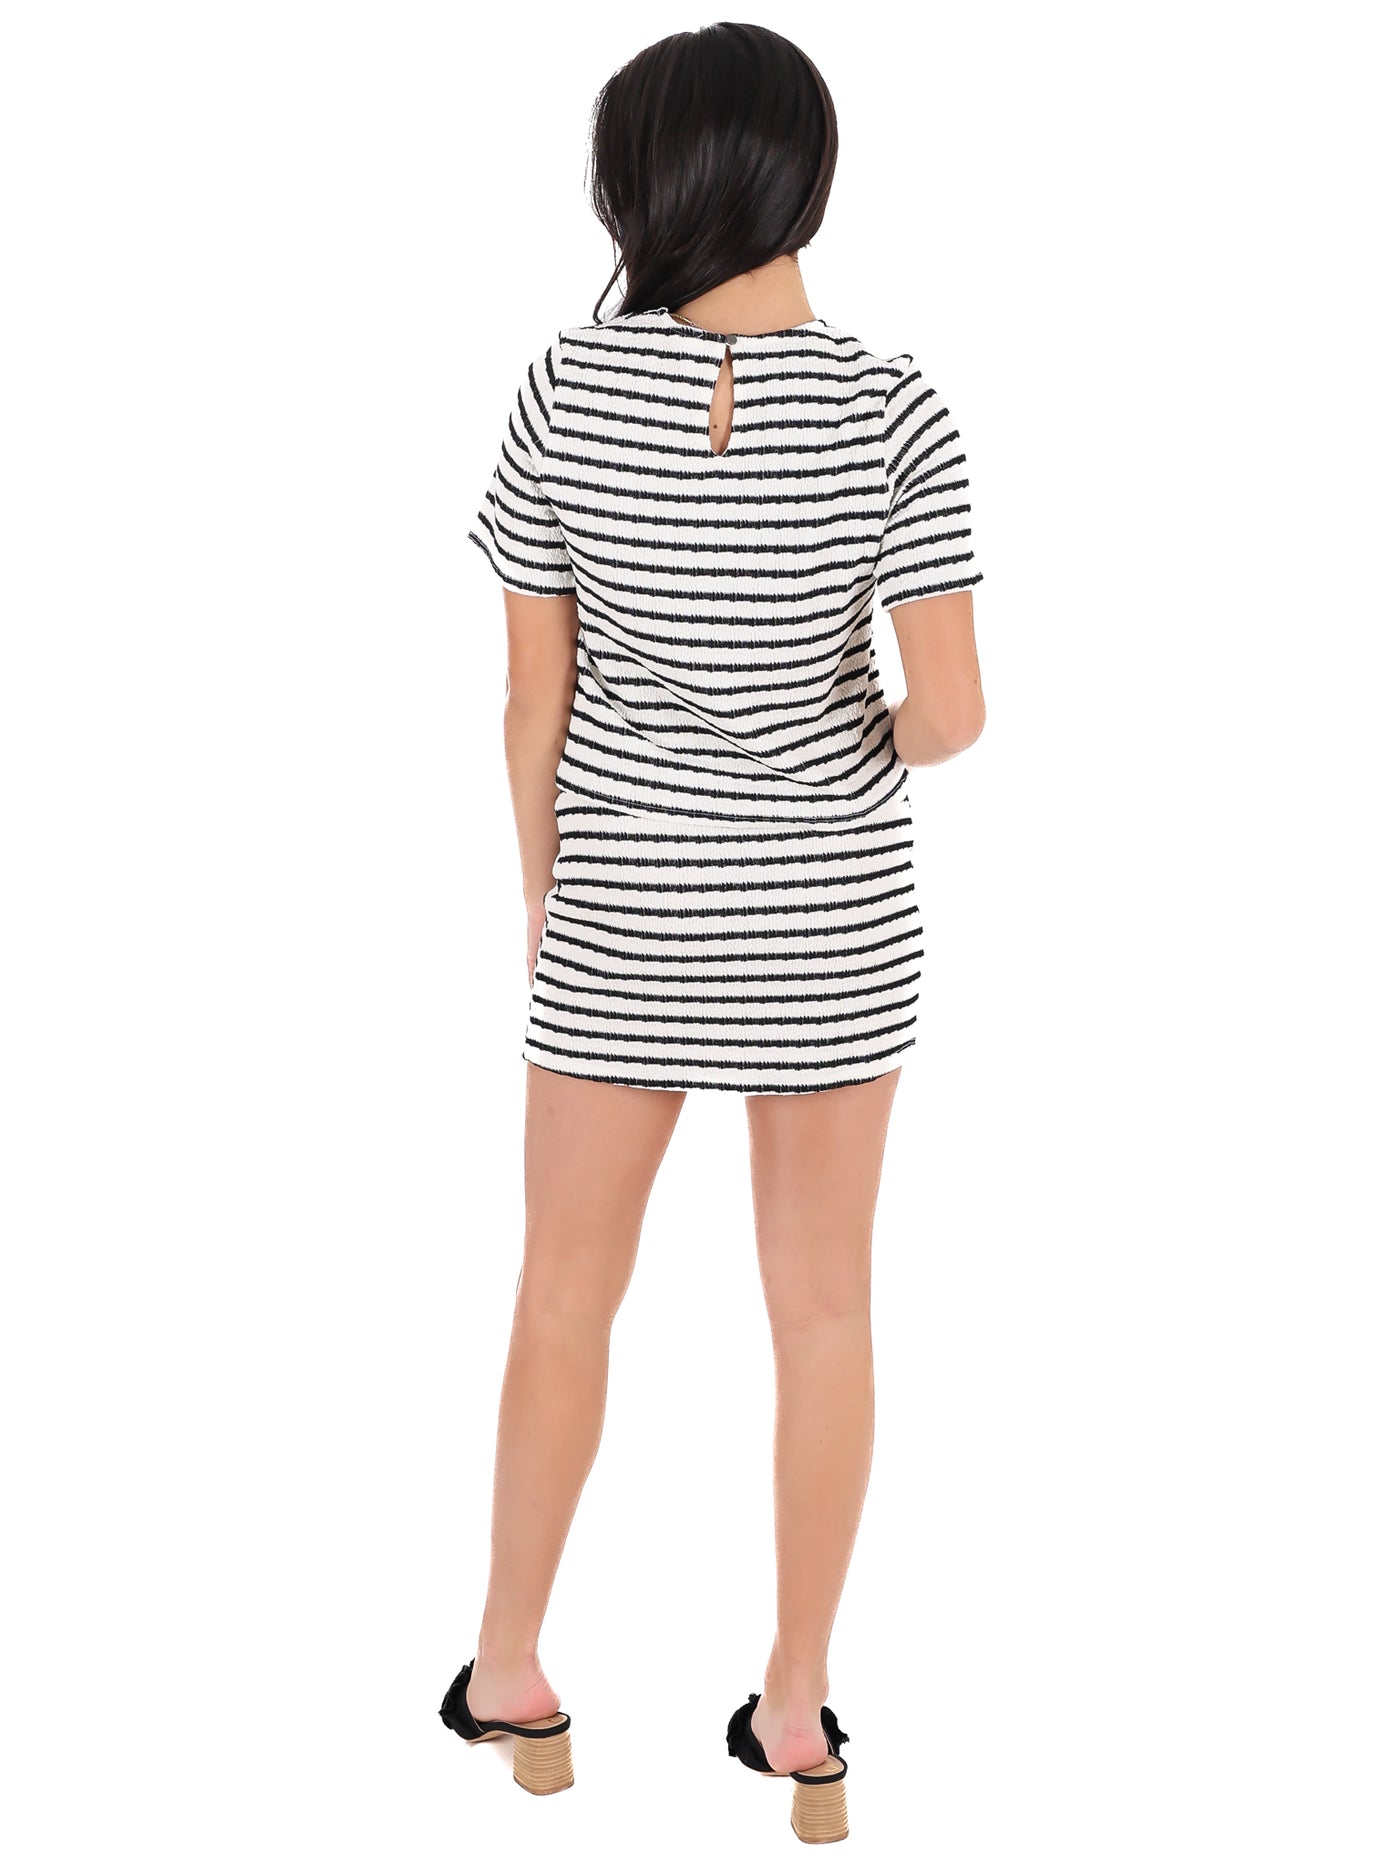 Sweetest Soul Stripe Mini Skirt Set